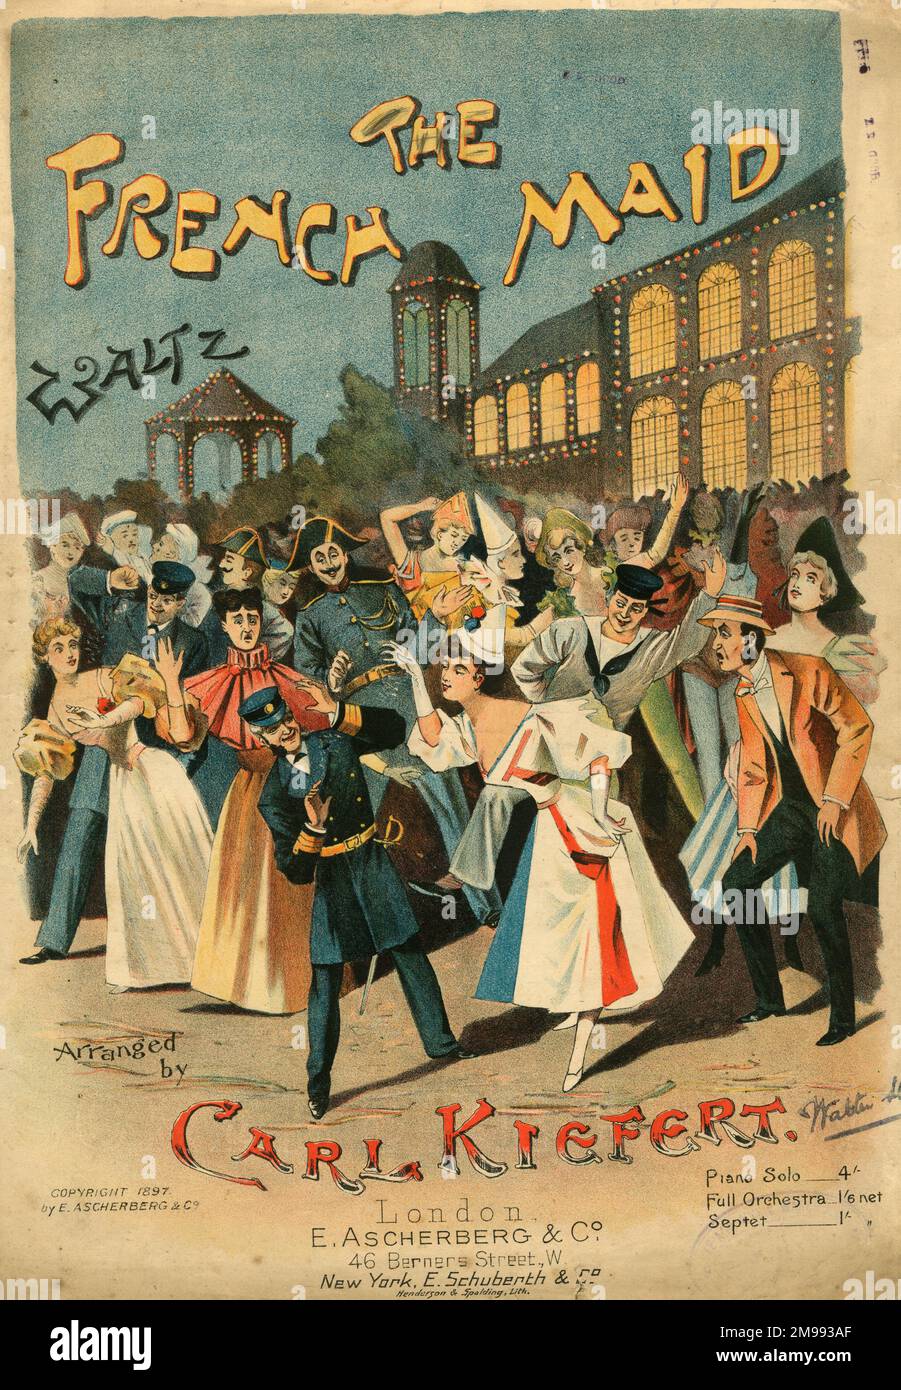 Copertina musicale, la Maid Waltz francese, arrangiata da Carl Kiefert, raffigurante una festa di abiti di fantasia. Foto Stock